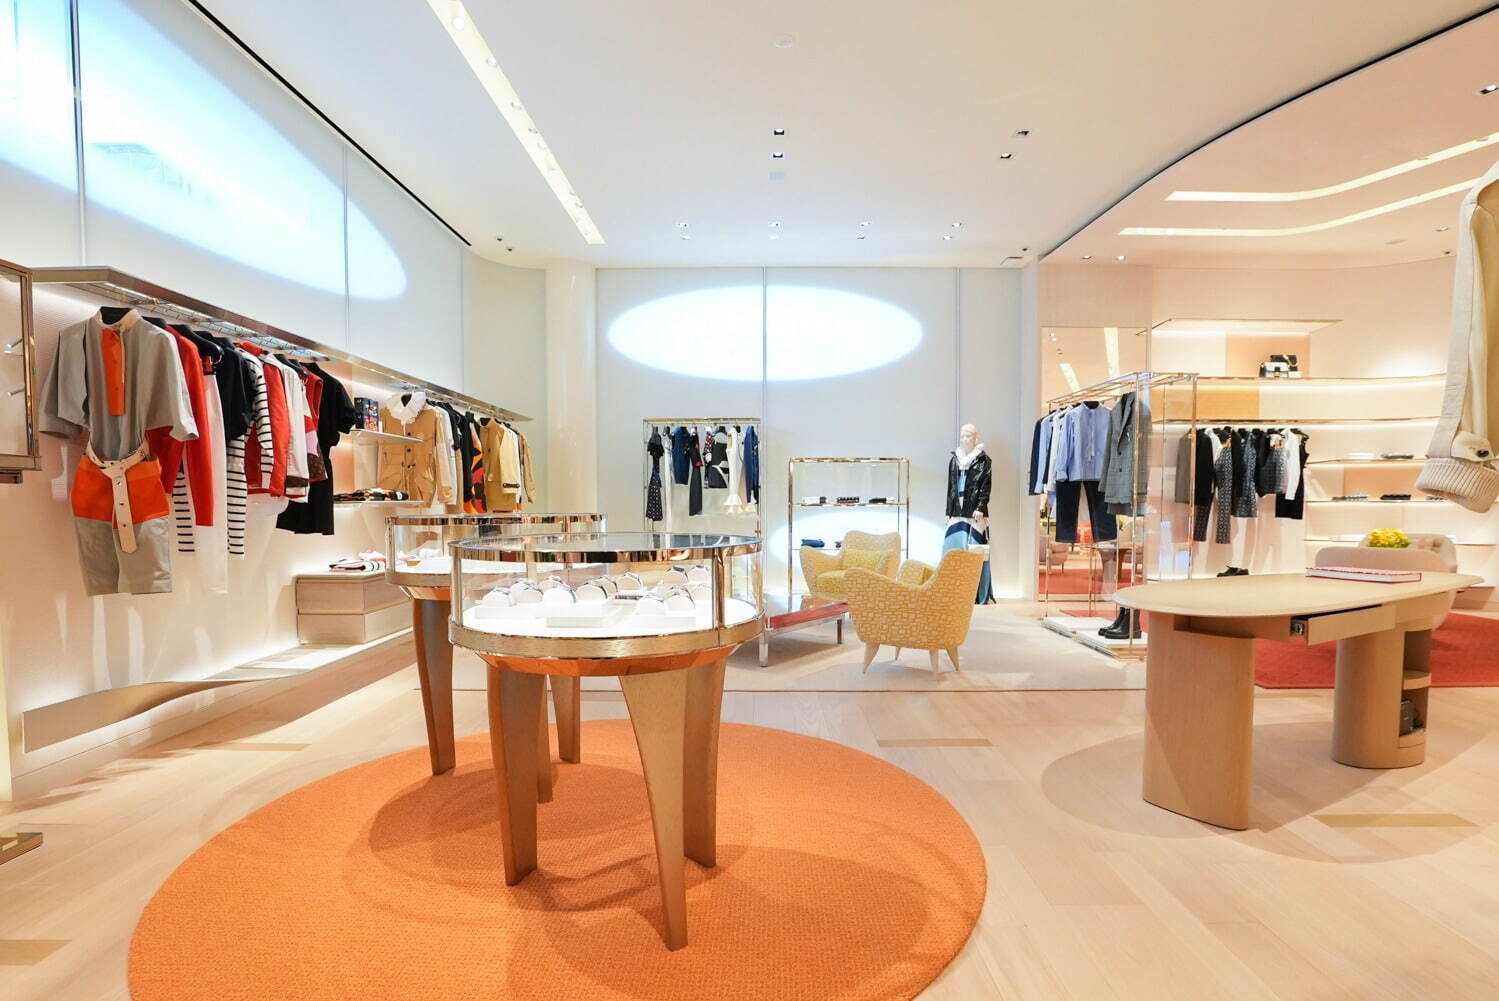 Louis Vuitton Ginza Namiki-dori store opened on March 20, 2021